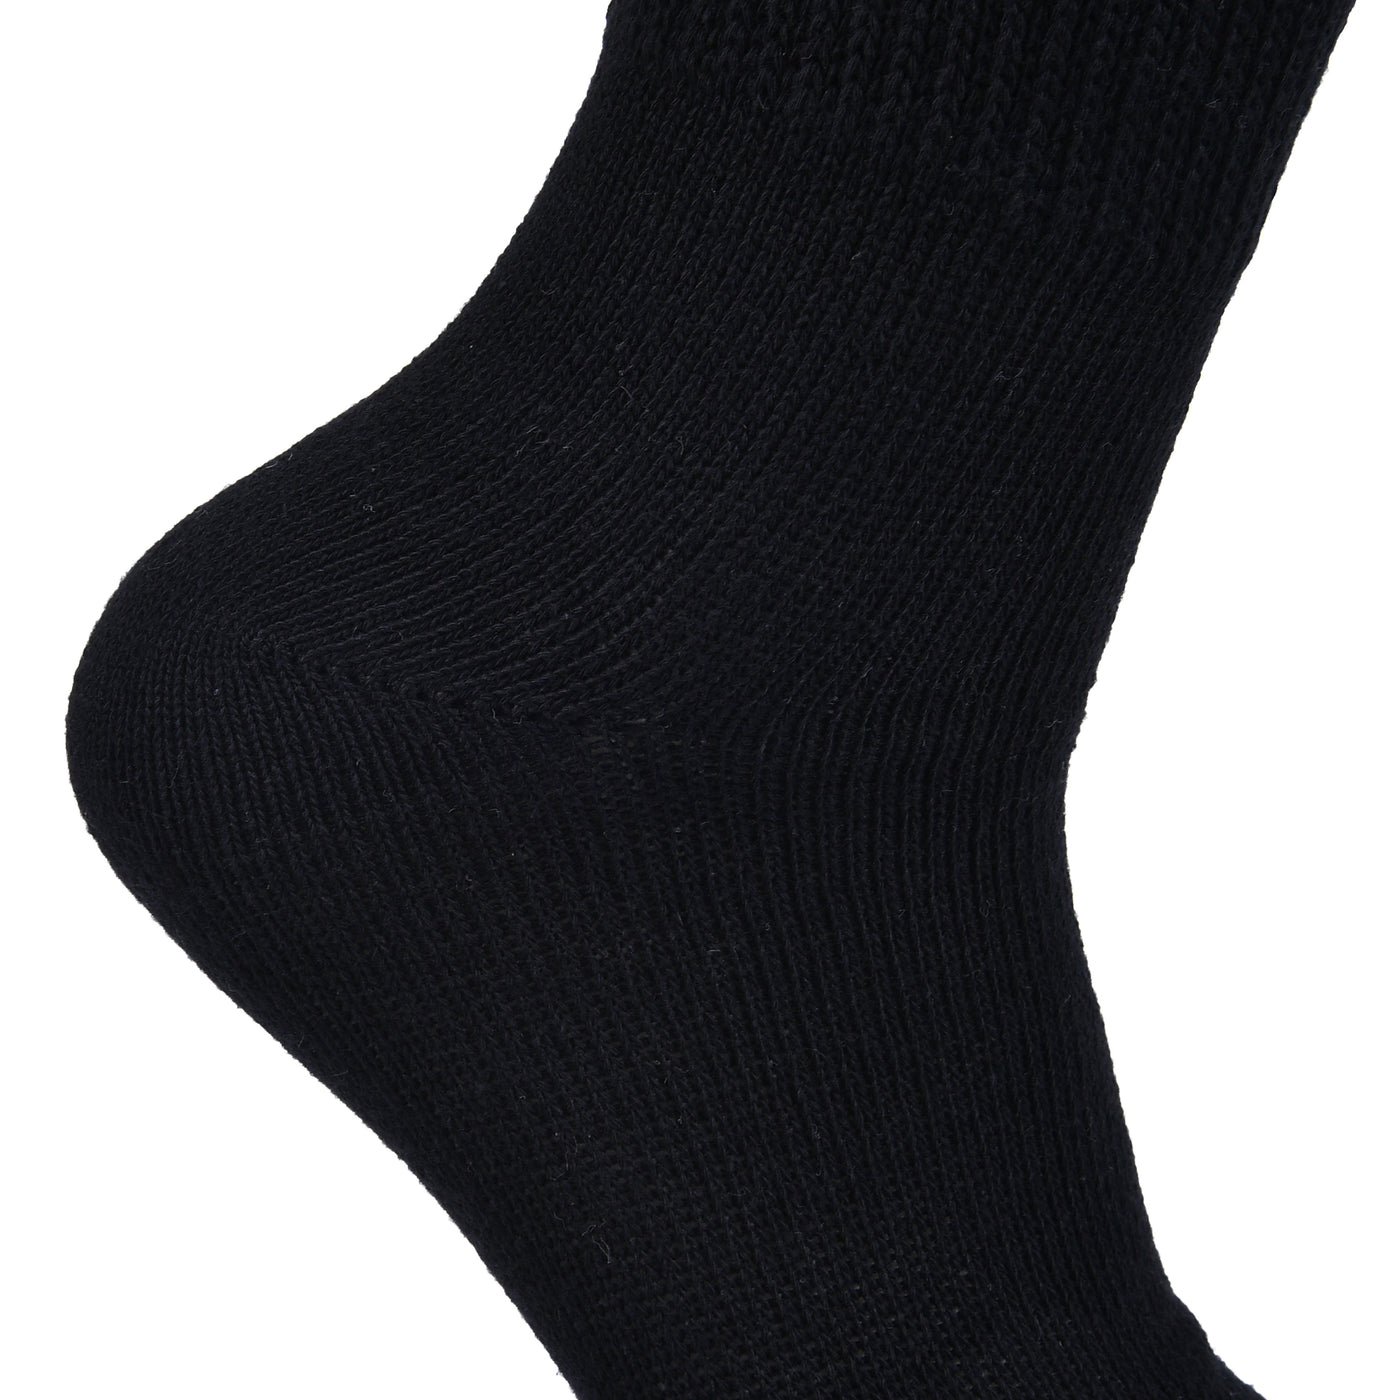 Laulax 3 Pairs Mens Loose Top Gentle Grip Diabetic Cotton Socks Size UK 7-11 / Europe 40-46, Gift Set 2 Design